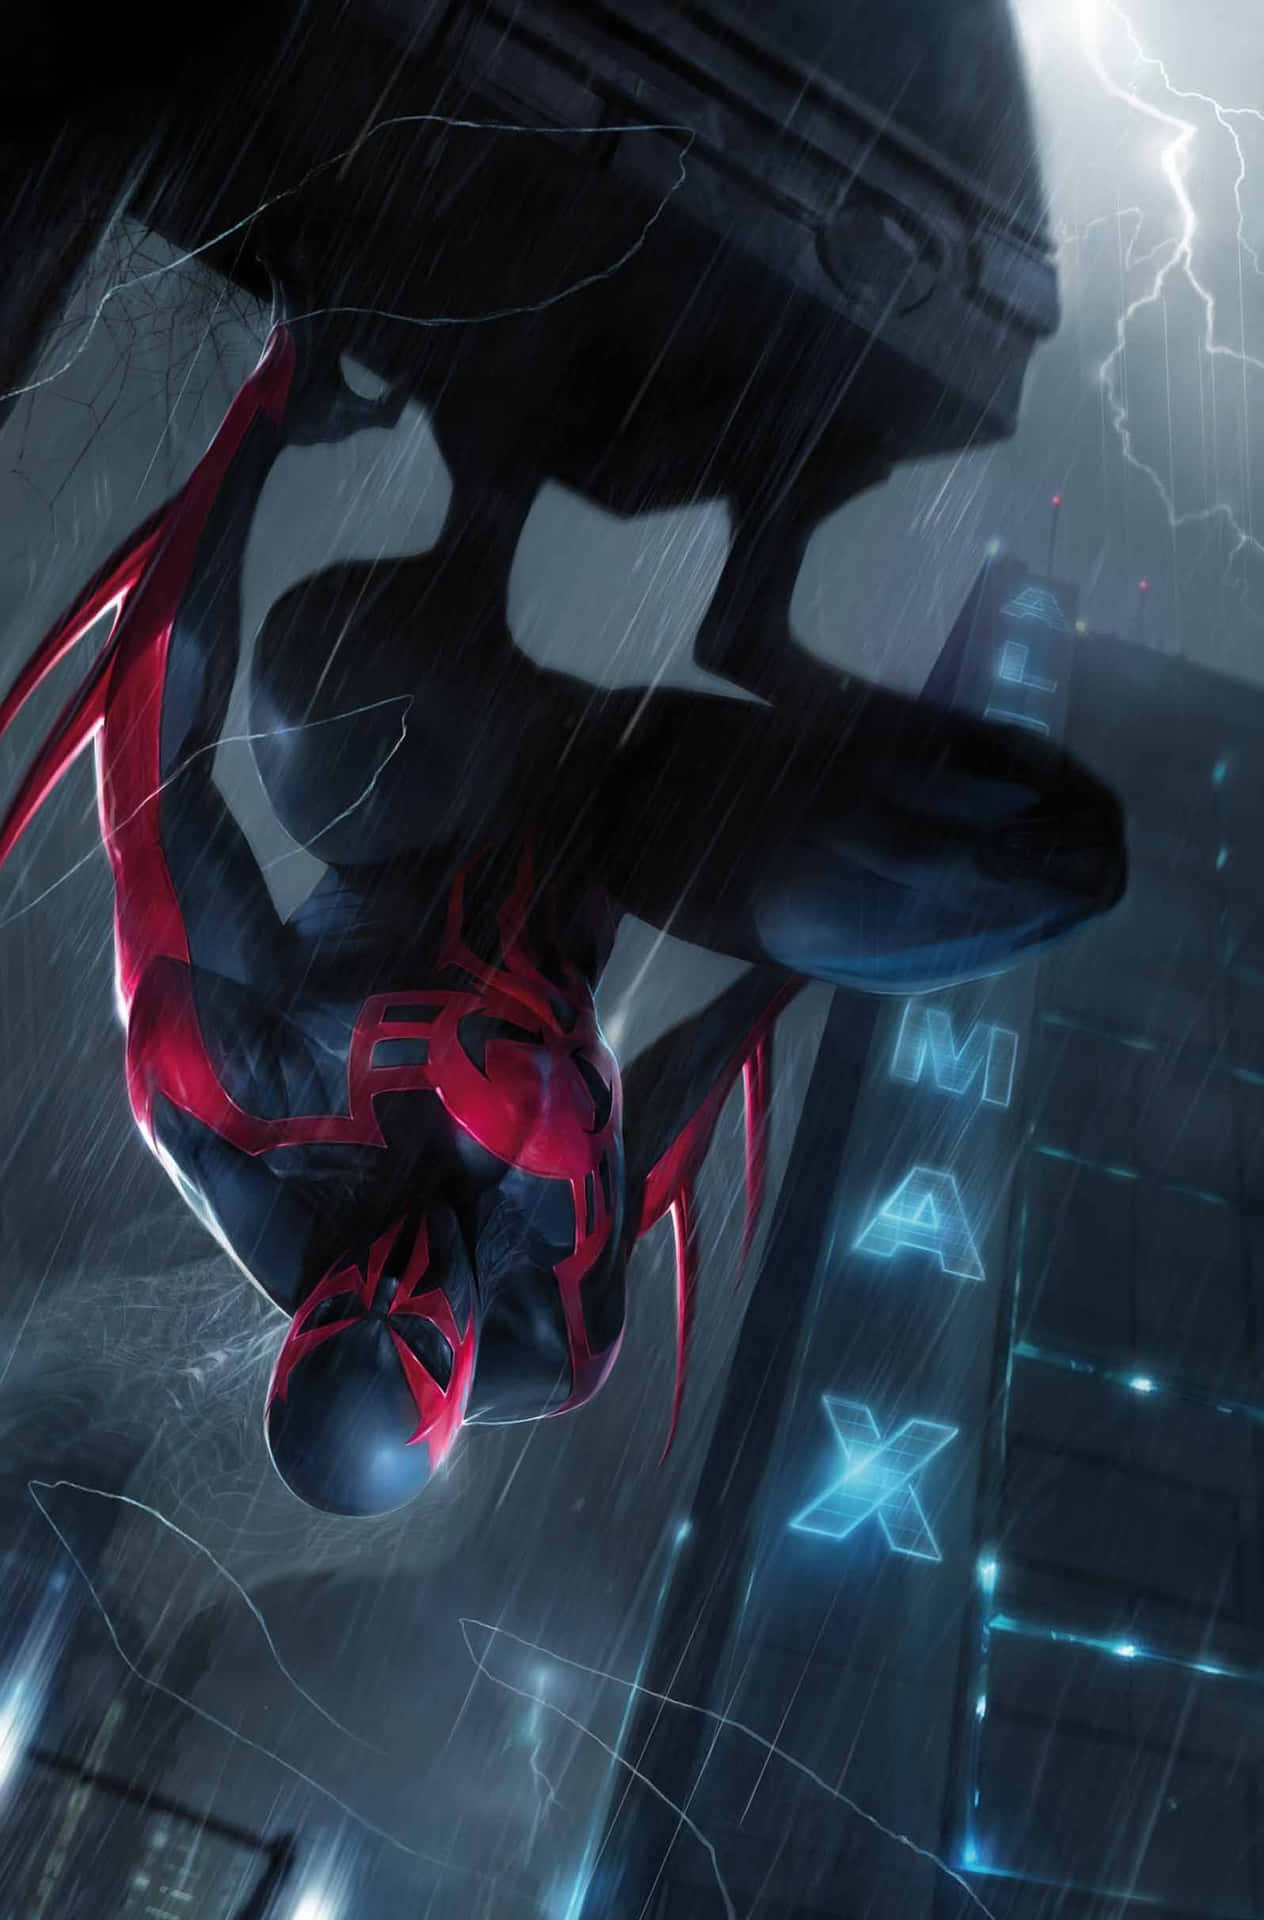 Futuristic Spider-Man 2099 in Action Wallpaper